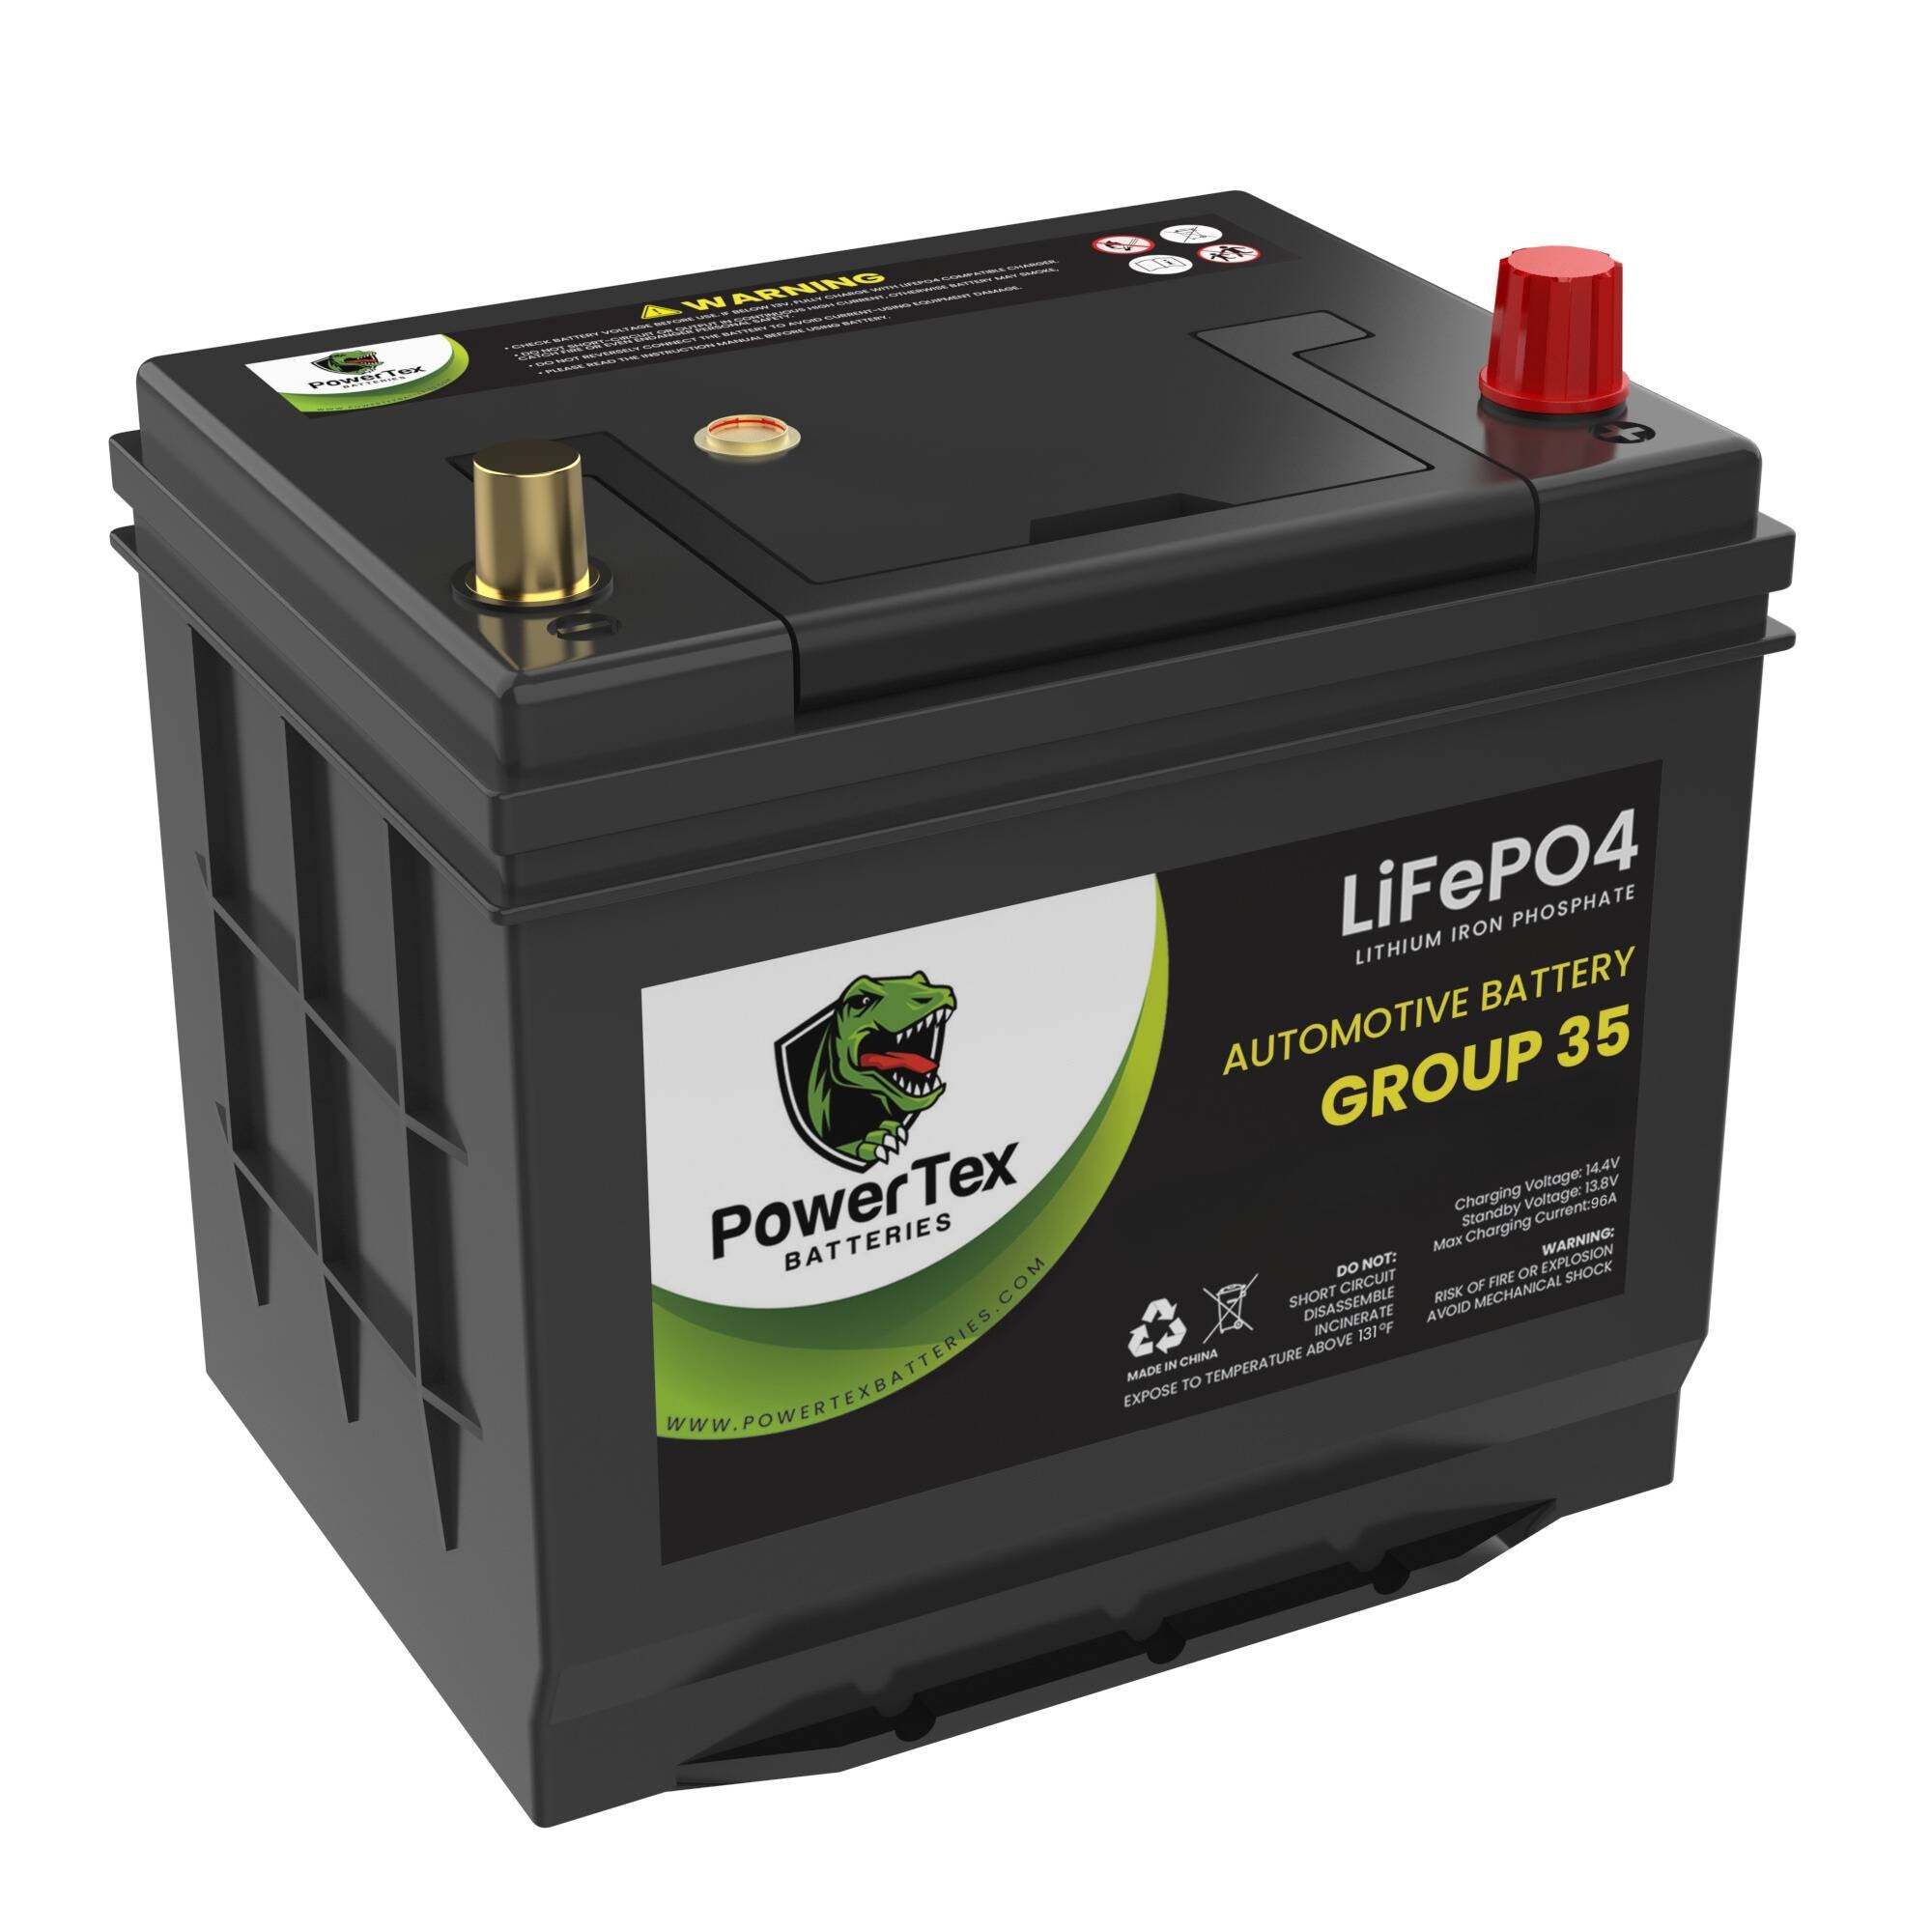 2014 Infiniti Q60 Car Battery BCI Group 35 / Q85 Lithium LiFePO4 Automotive Battery